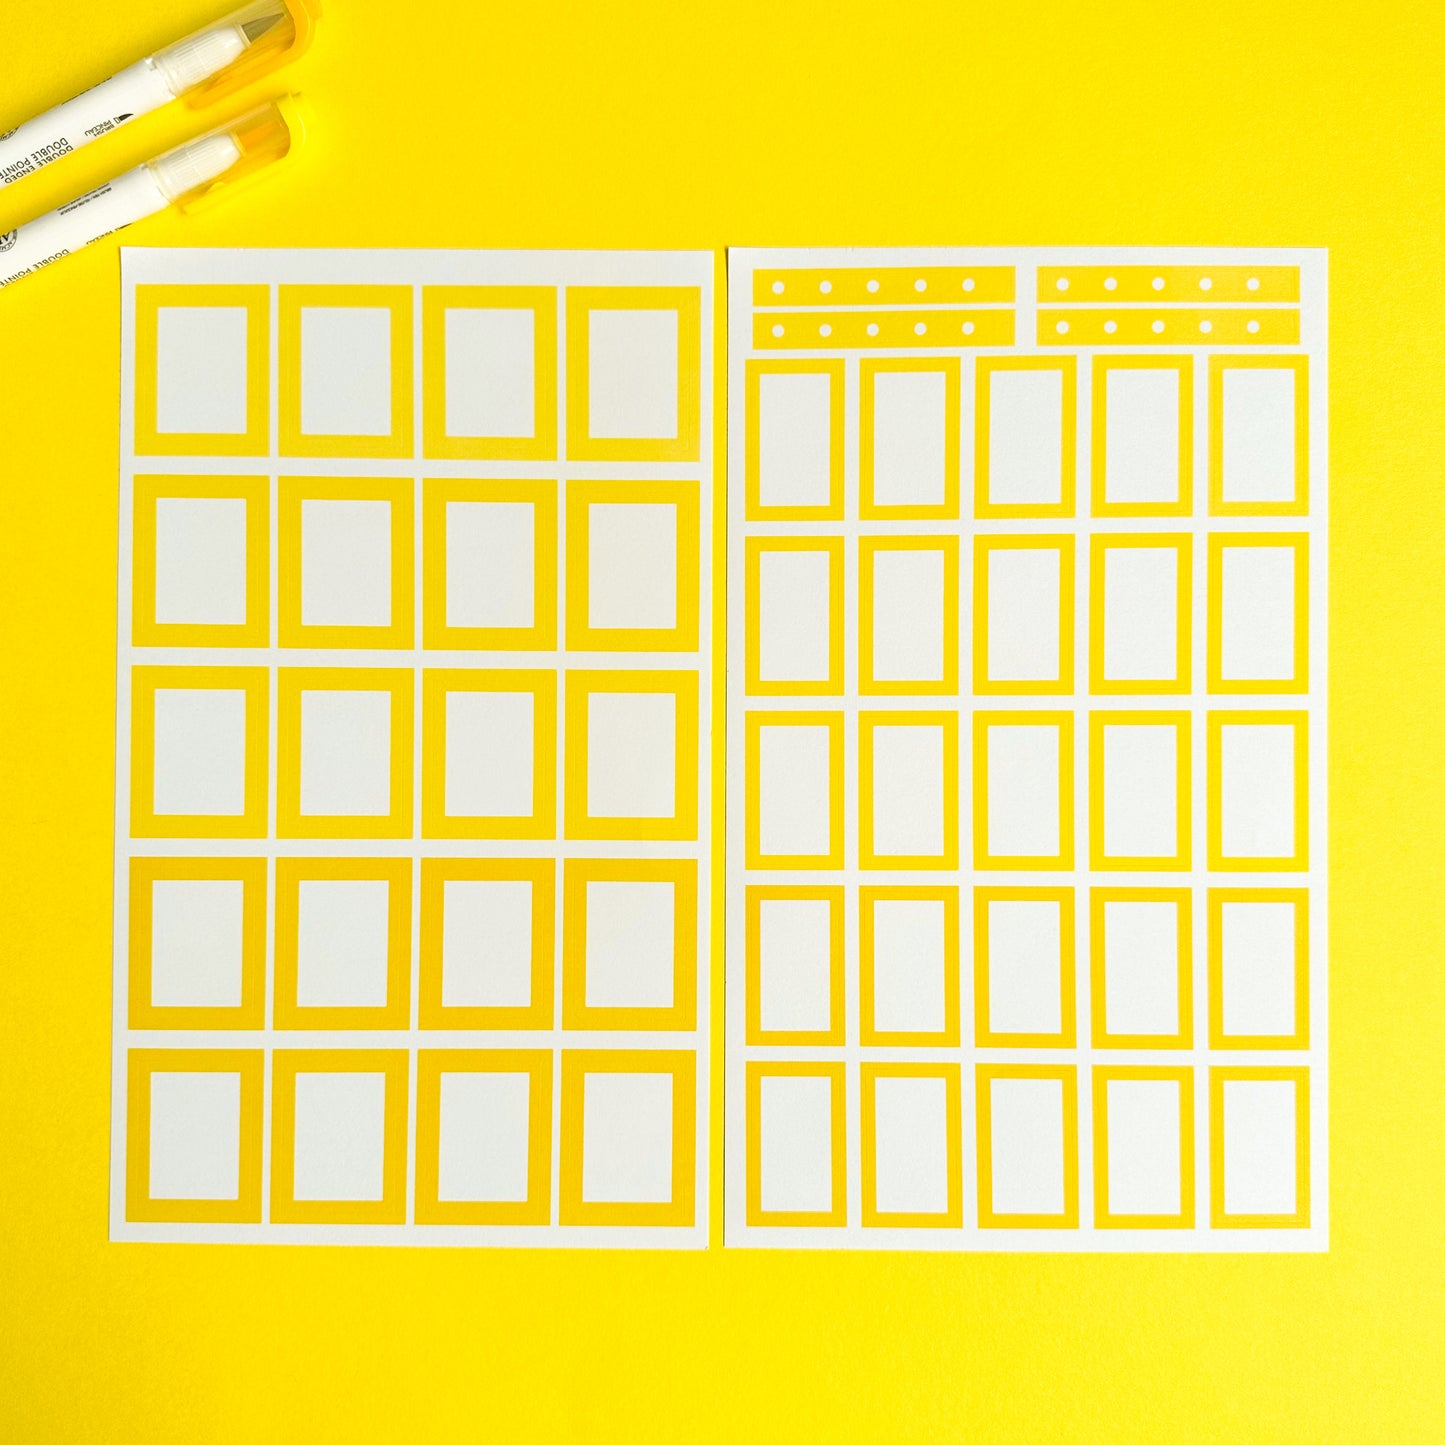 LLP: "Yellow Blooms" Sticker Book